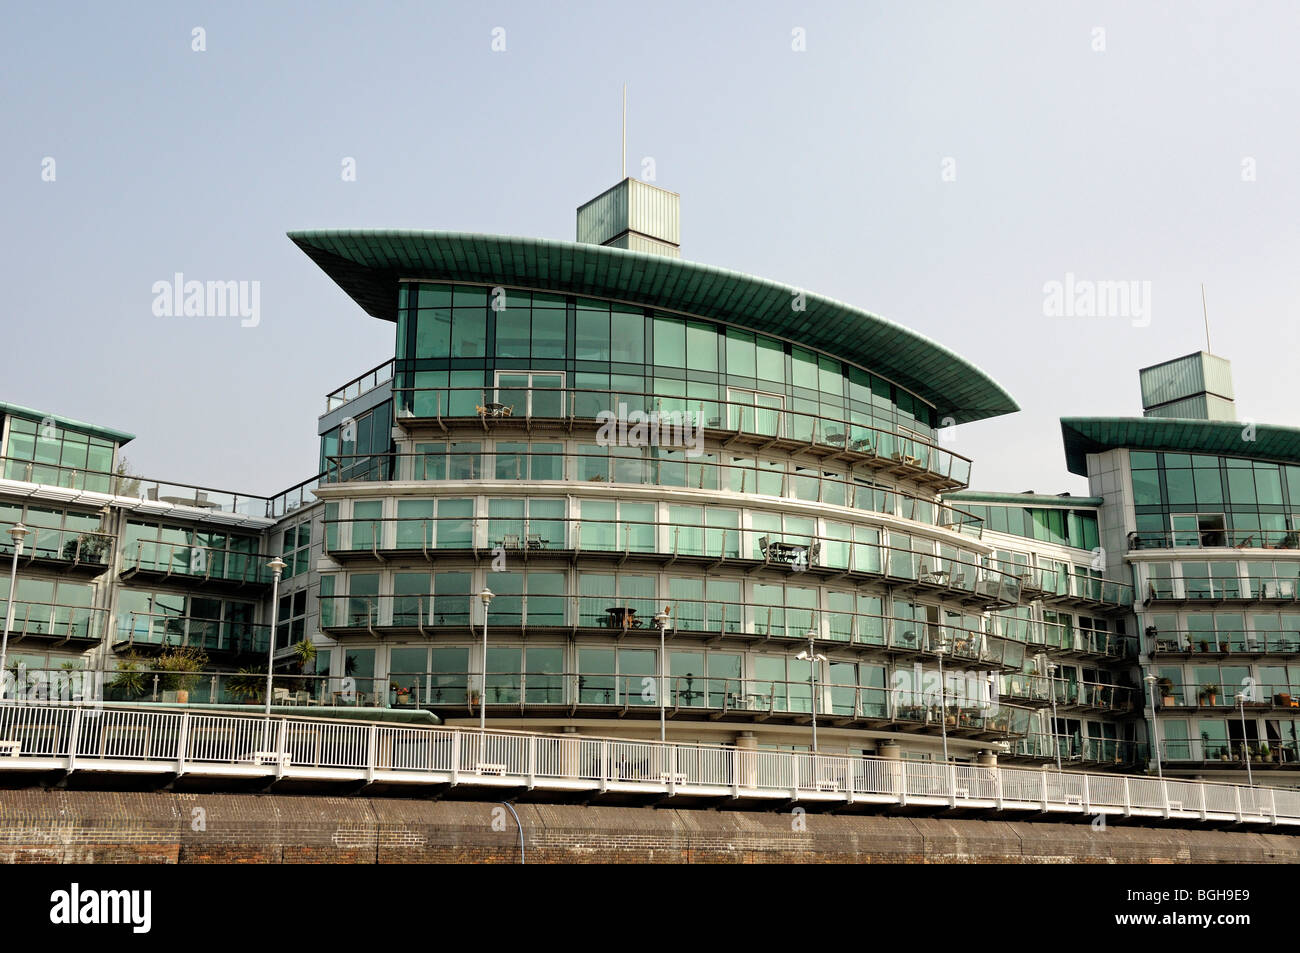 Moderne Apartments mit Balkonen Wapping Tower Hamlets East London England UK Stockfoto